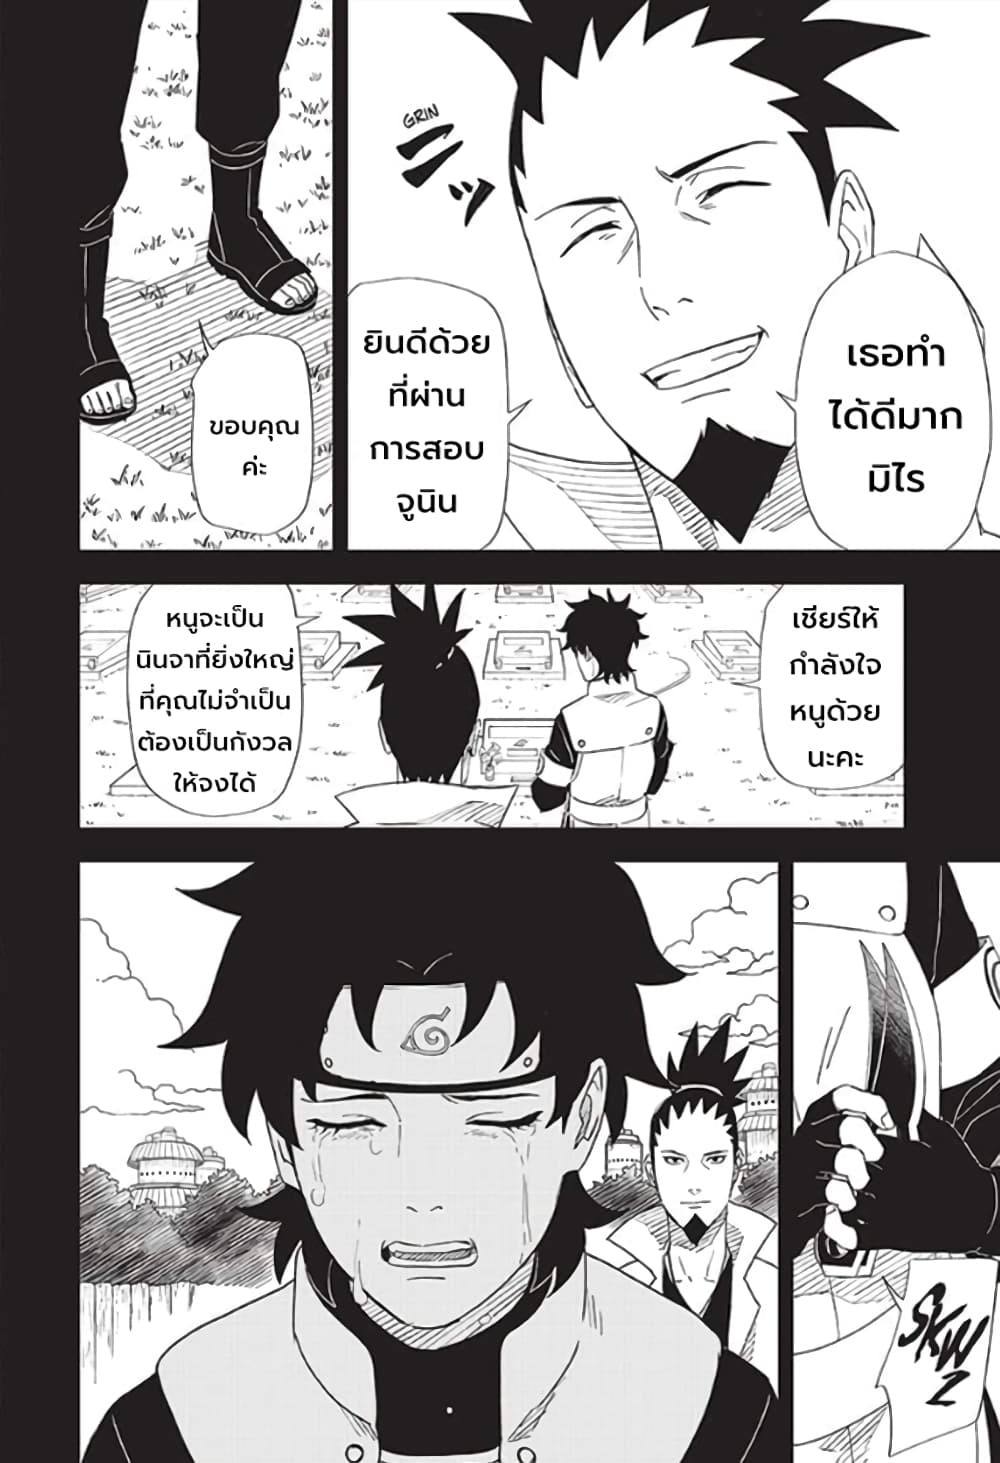 Naruto Konoha’s Story – The Steam Ninja Scrolls The Manga ตอนที่ 8 (8)